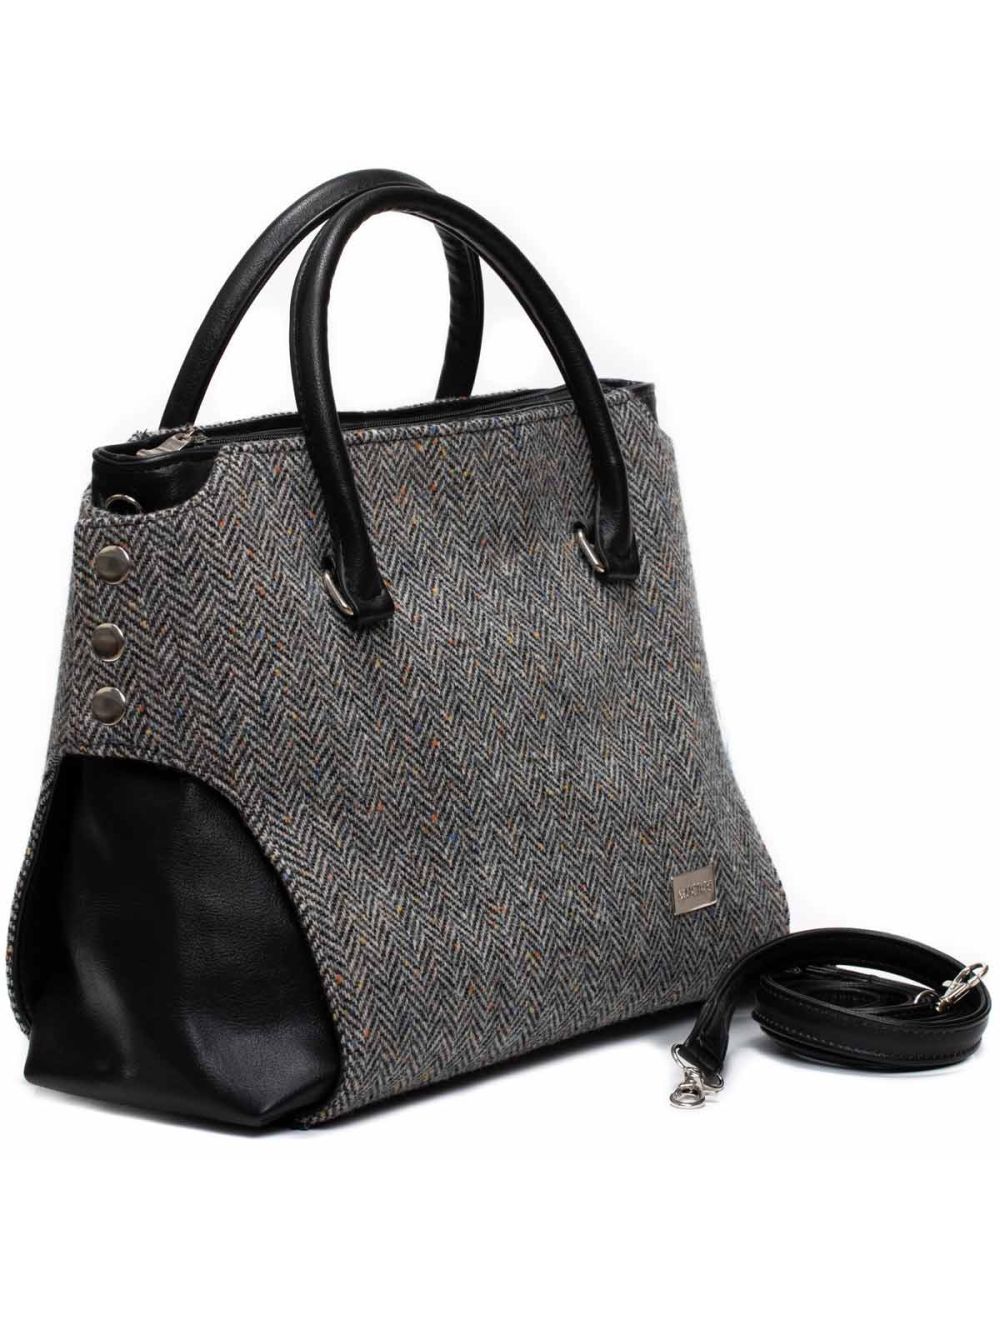 Small Leather Mobile Phone Purse/ Bag - Grey - LavenderLime Leather  Messenger Bag